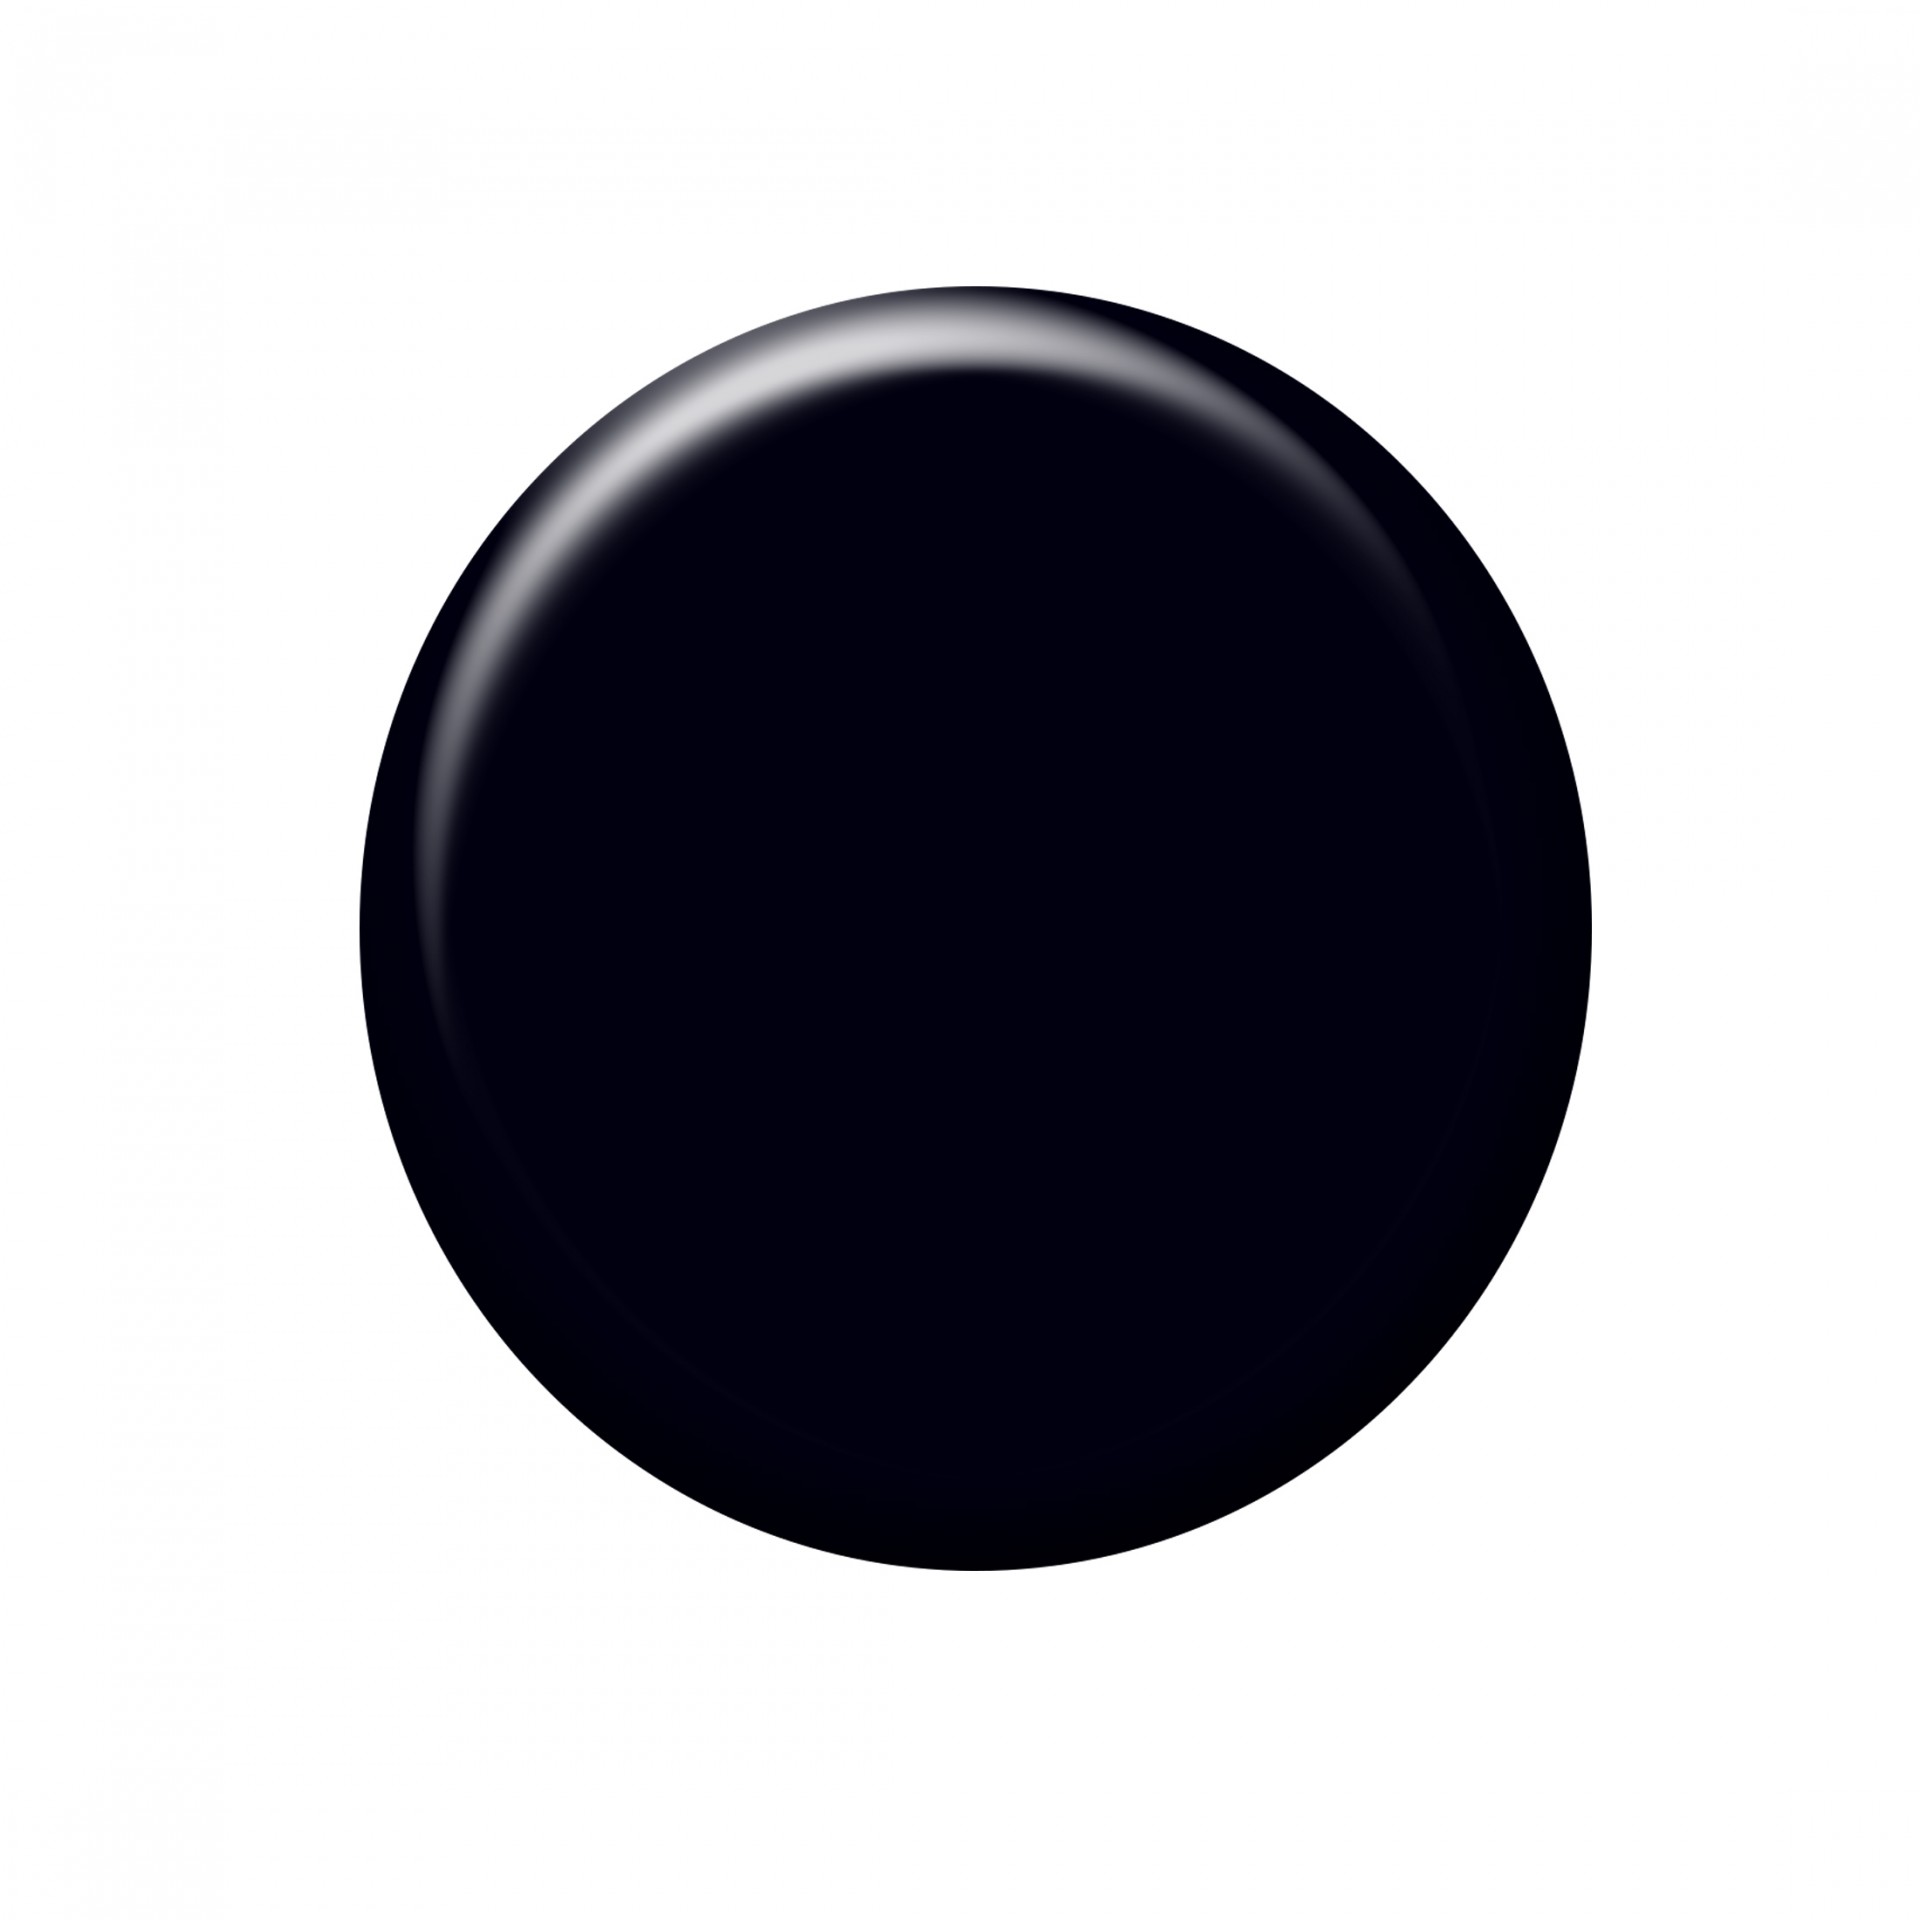 Black Button For Web